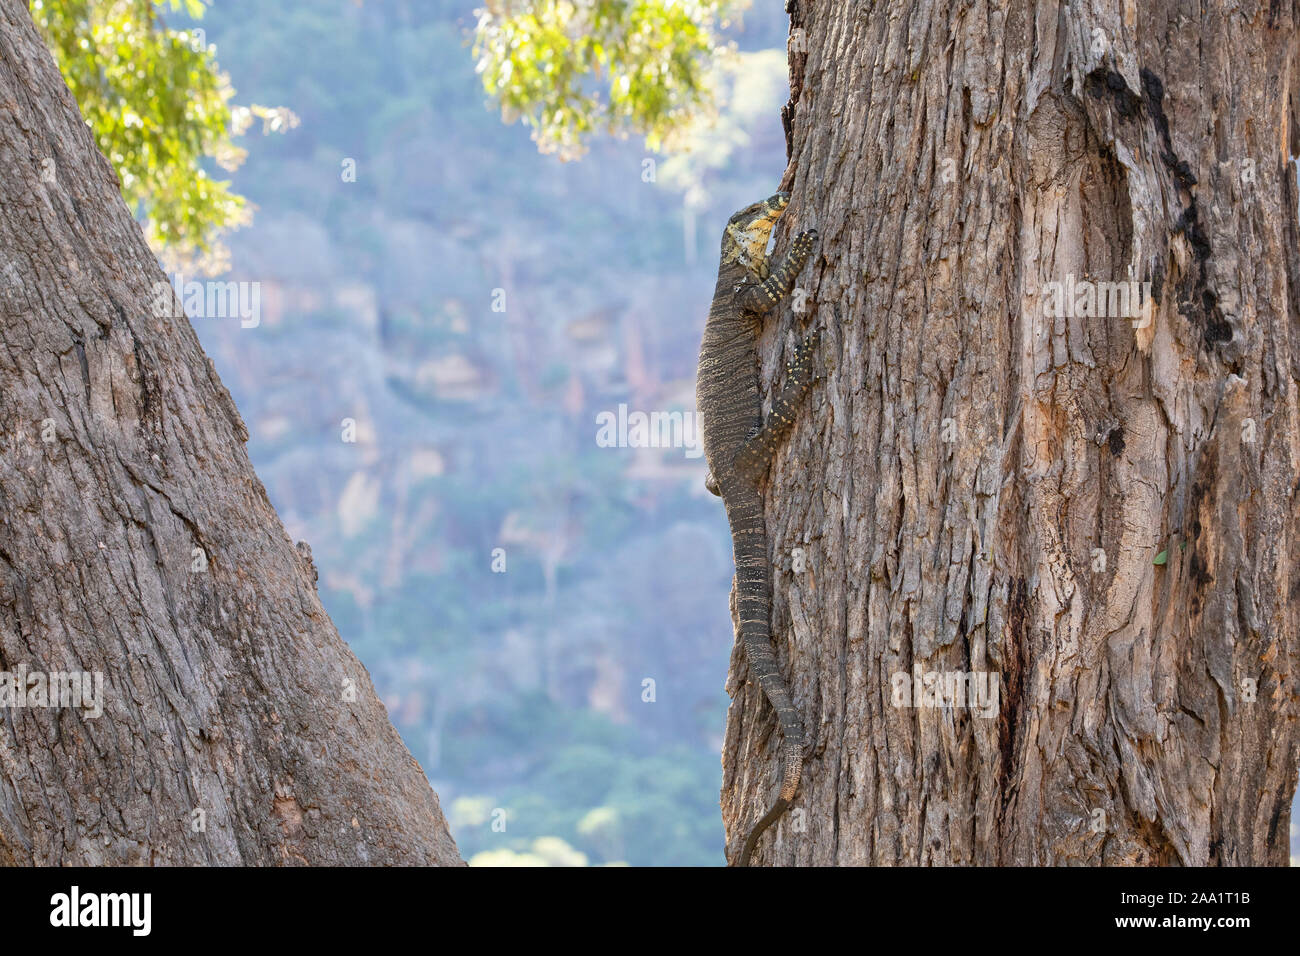 Lace Monitor (Varanus varius) climbing on a tree. Also known as a goanna. Stock Photo